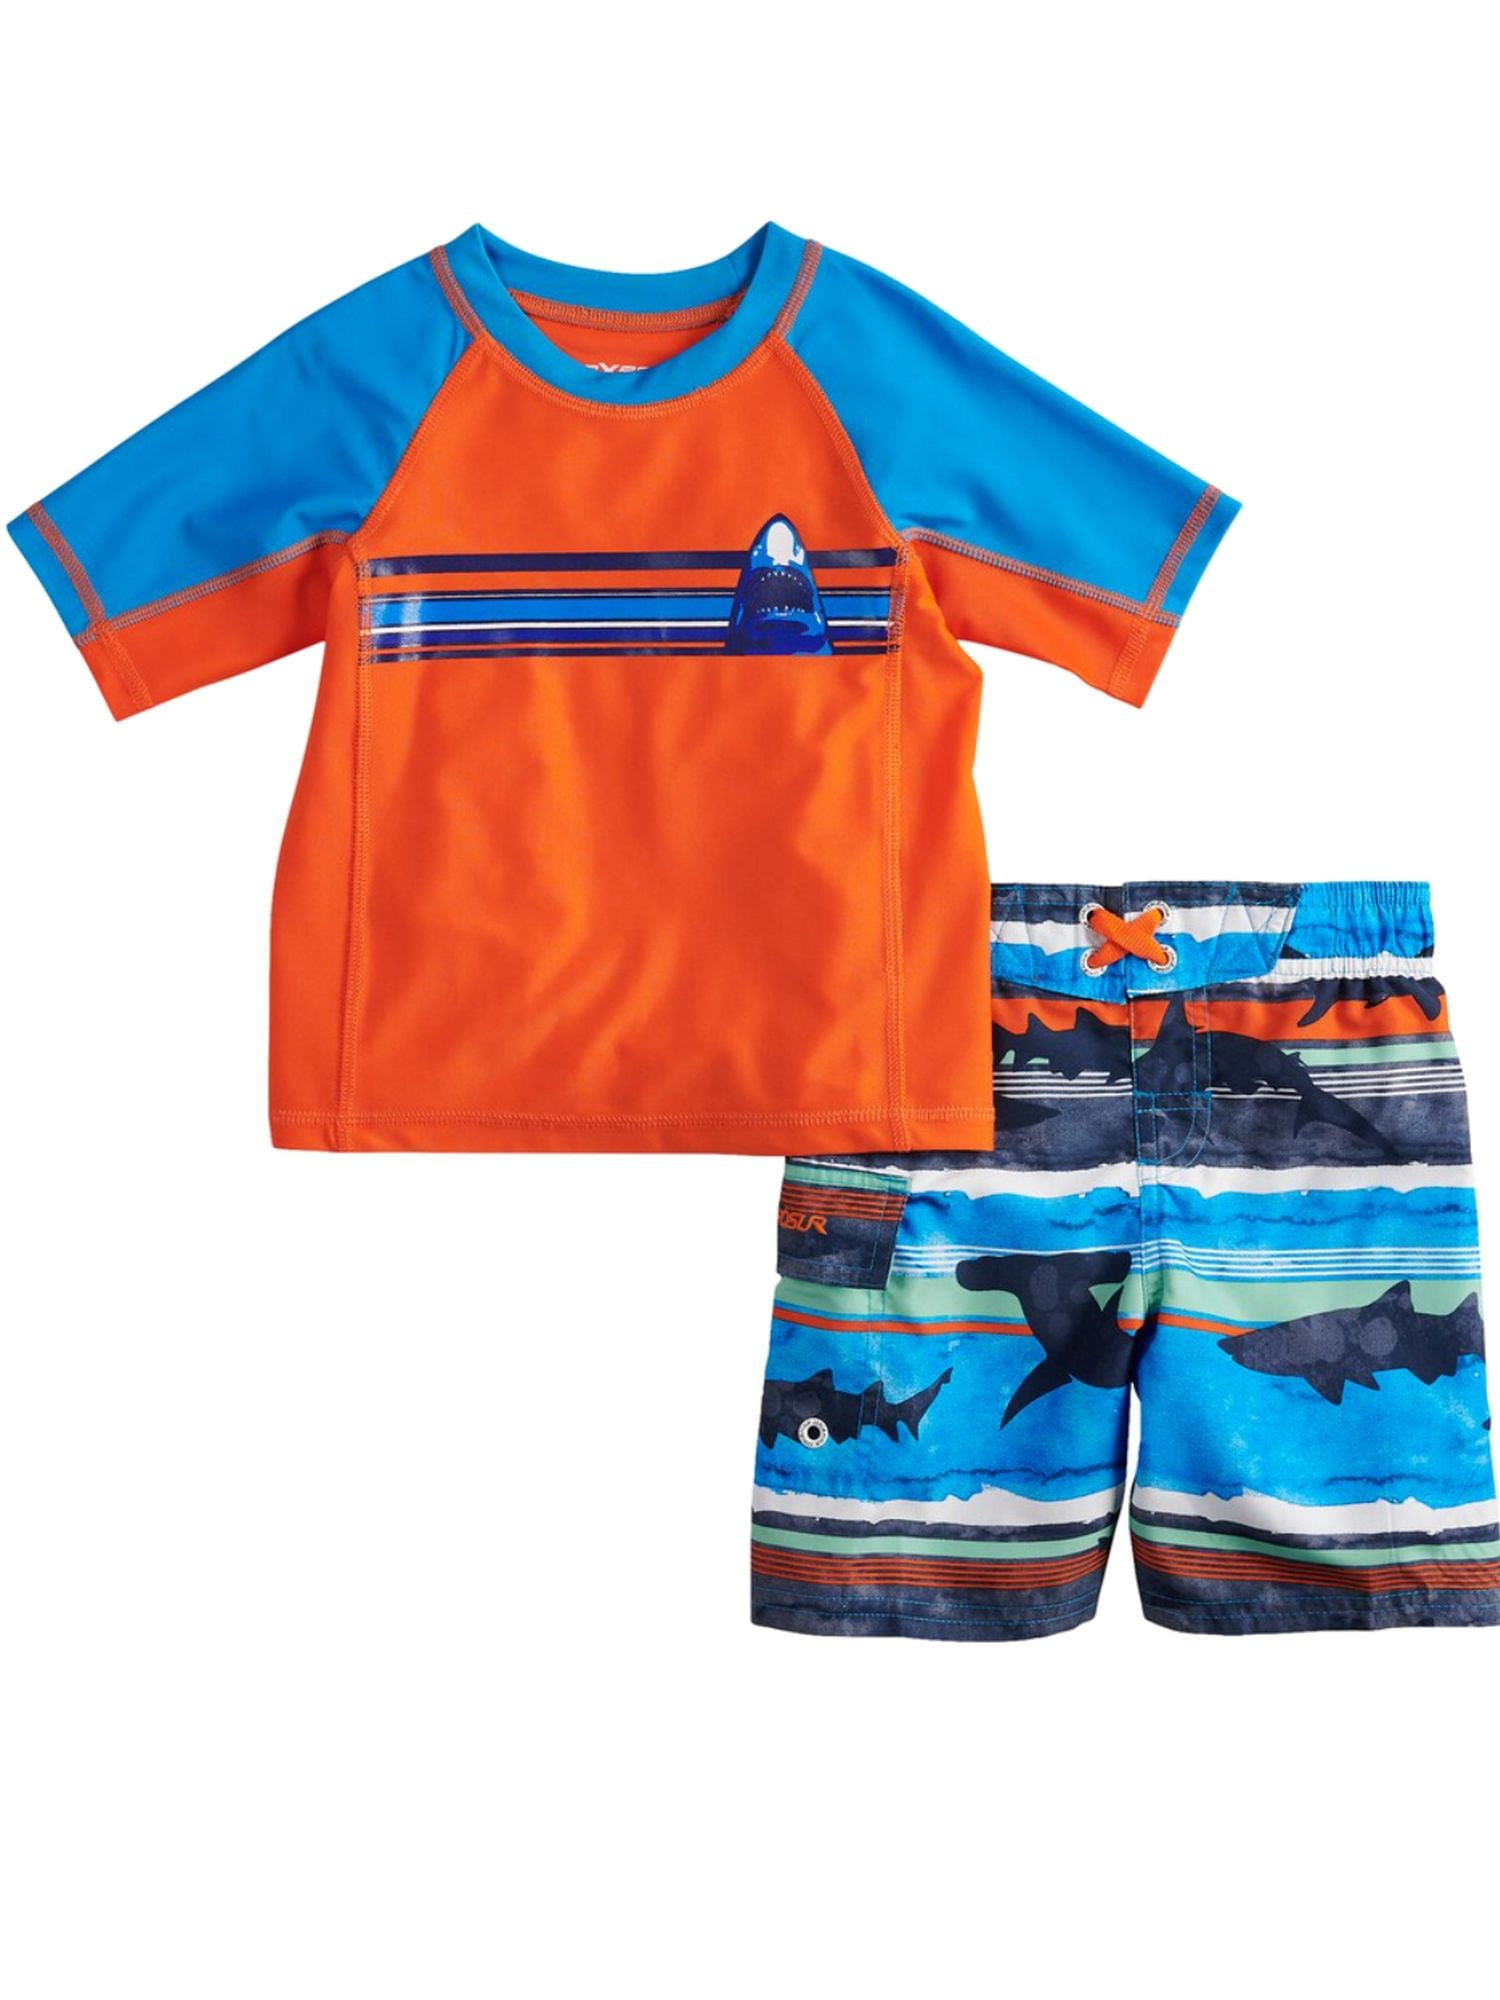 Details about   Boy's Whale Swim Rash-guard Shirt & Board Short Trunks Set NWT Size 12 Months 